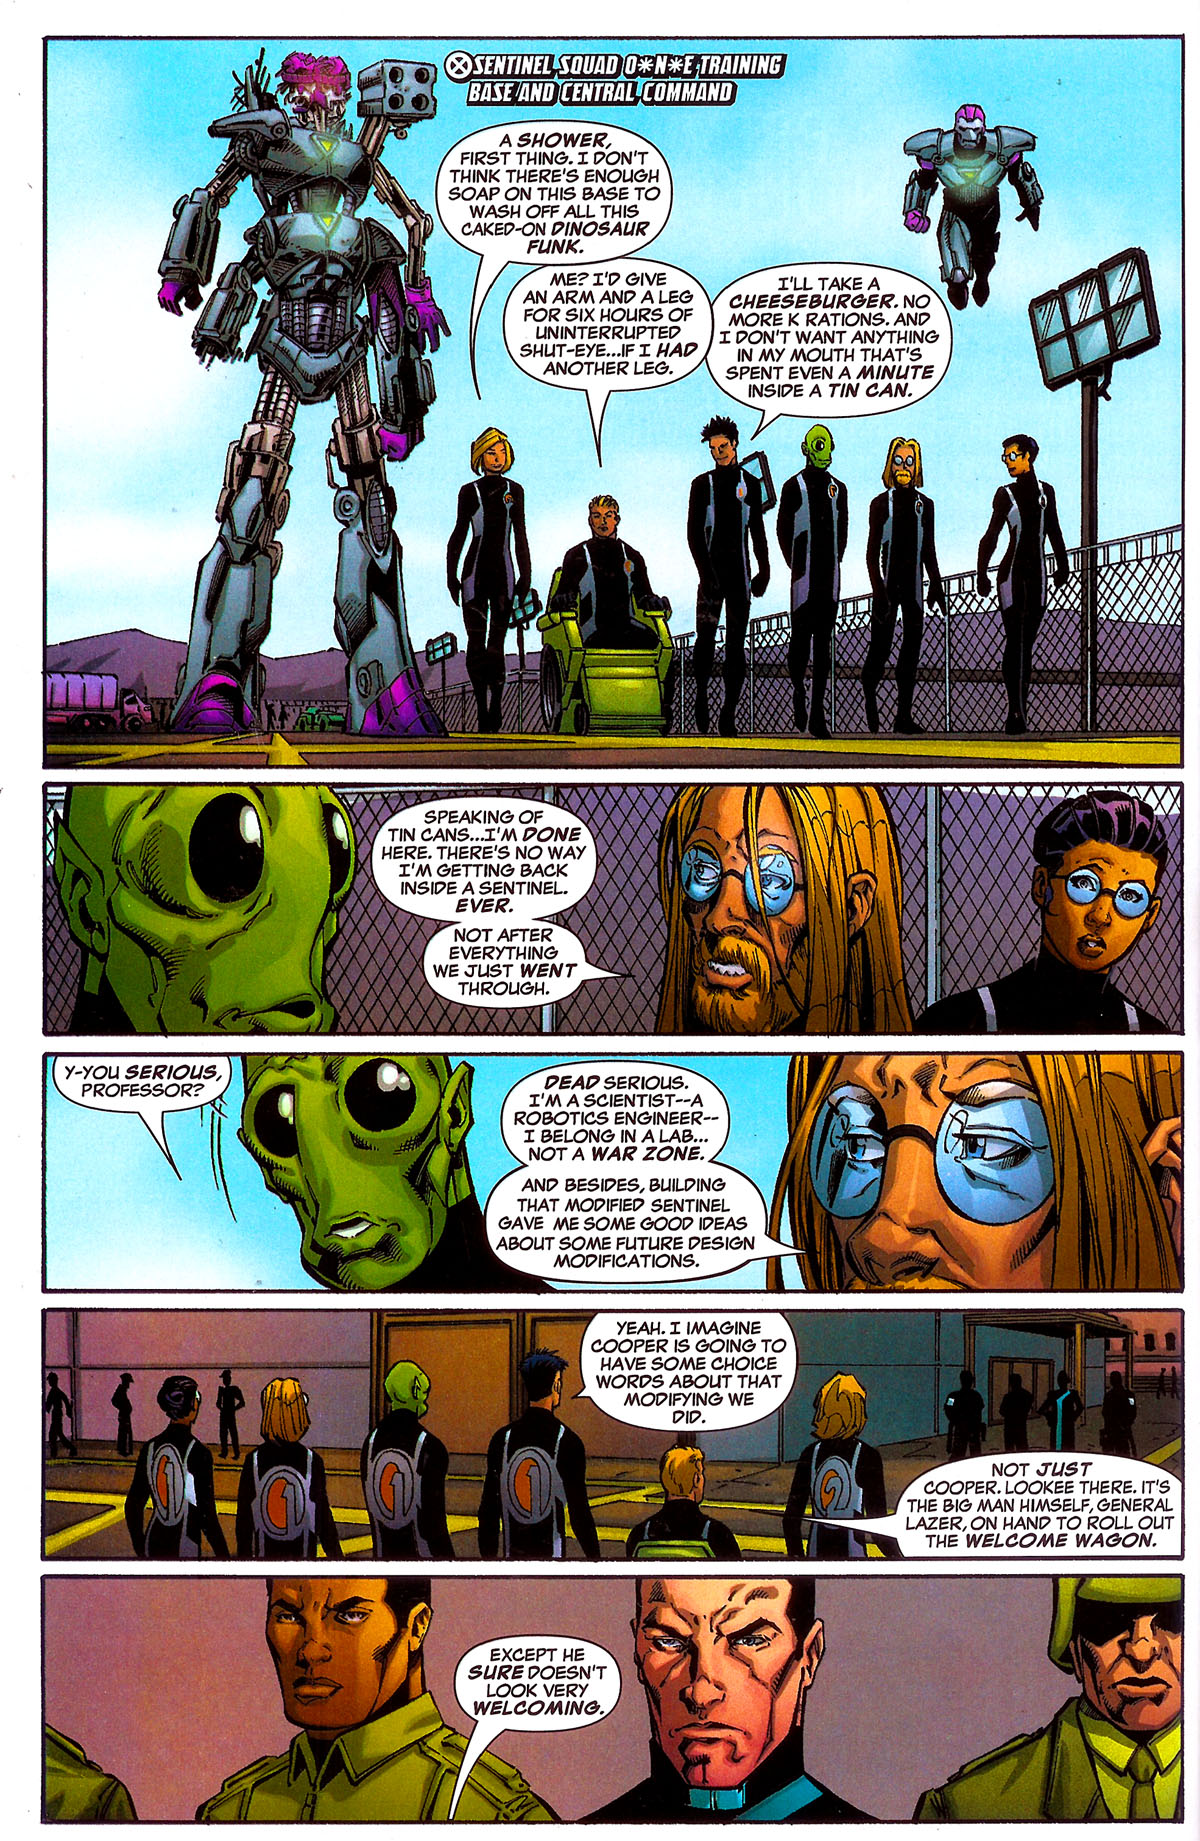 Read online Sentinel Squad O*N*E comic -  Issue #5 - 3